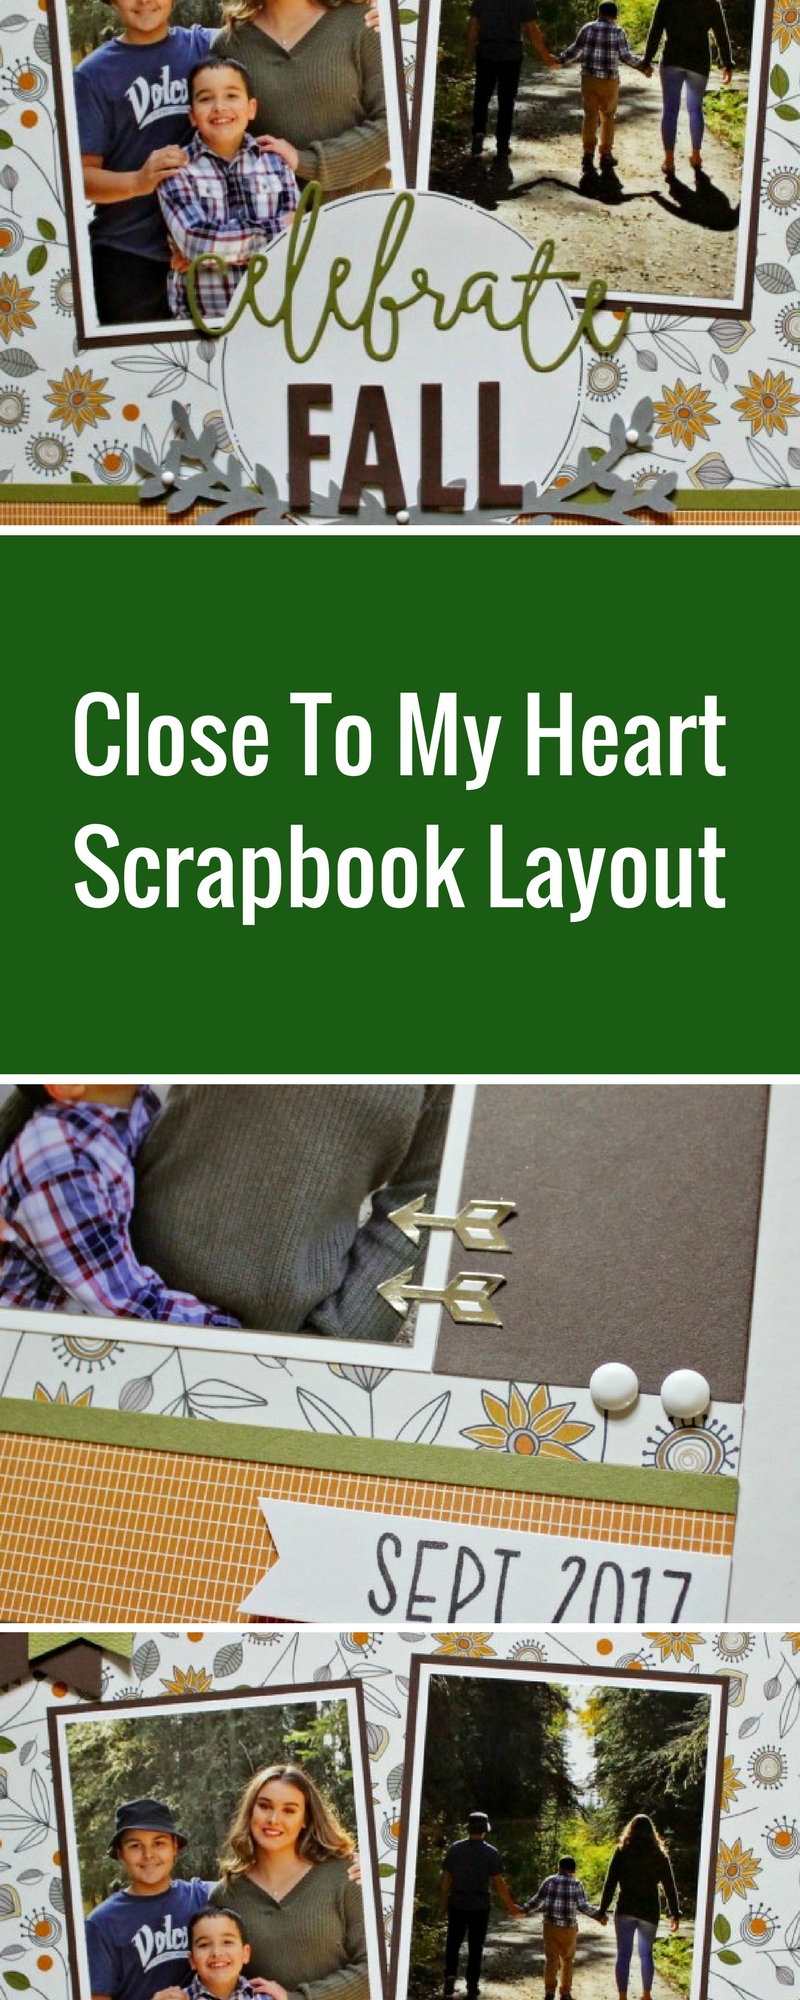 Close To My Heart Double Page Layout designed by Vicki Wizniuk | Creative Scrapbooker Magazine #doublepage #scrapbooking #fall